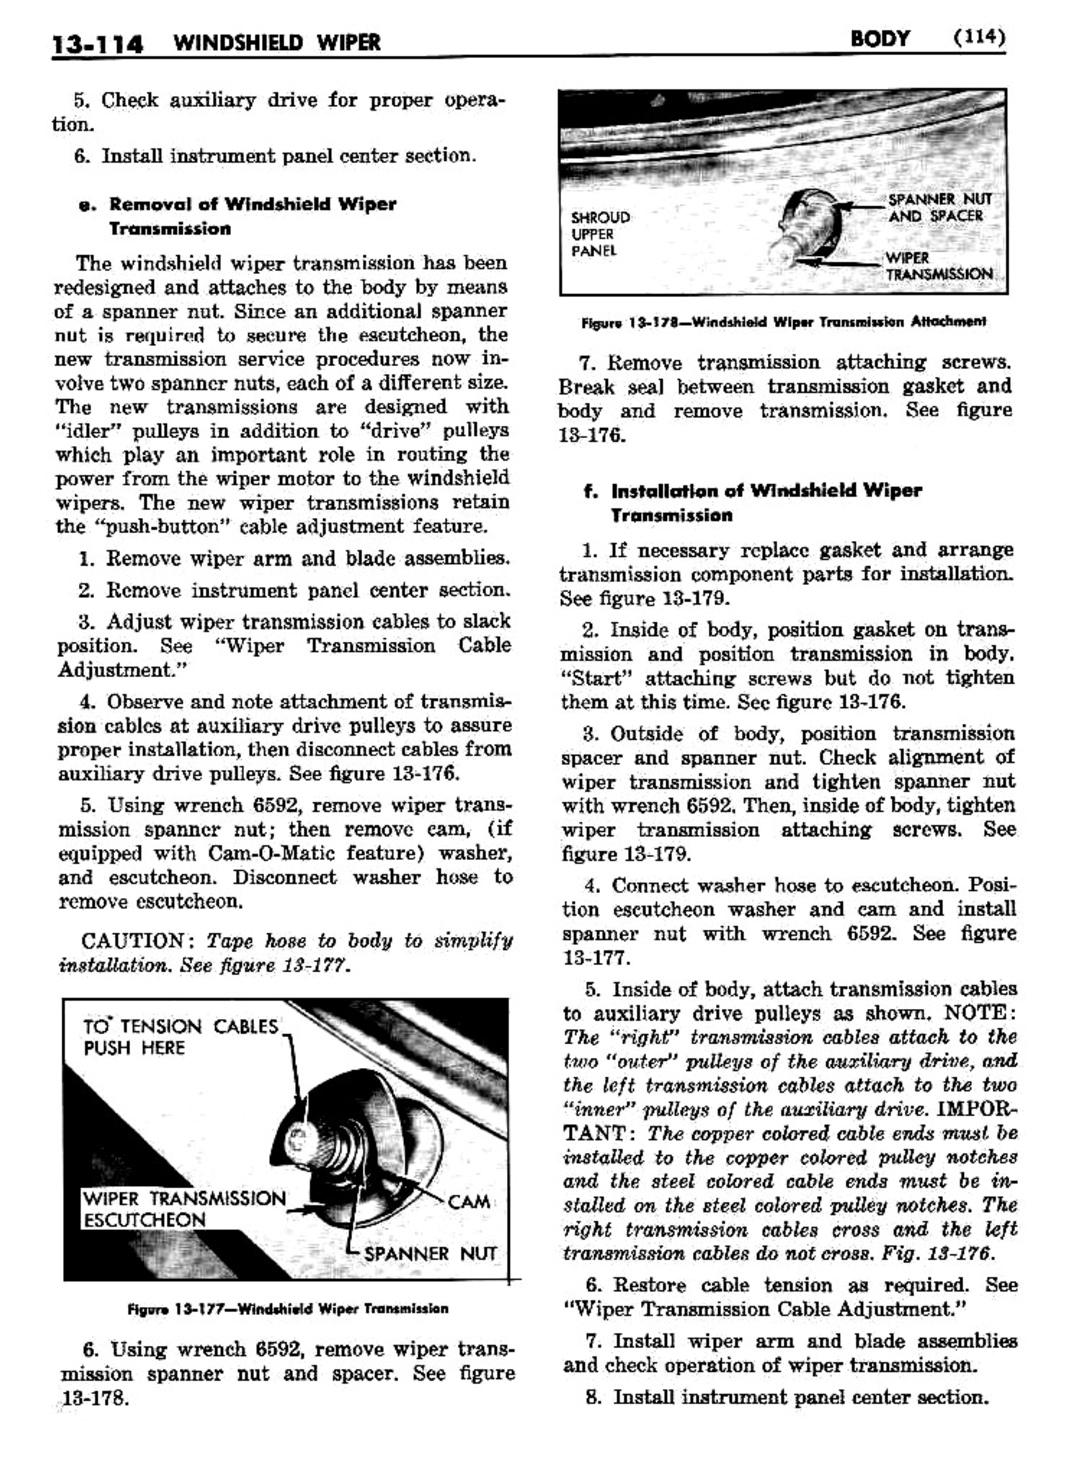 n_1957 Buick Body Service Manual-116-116.jpg